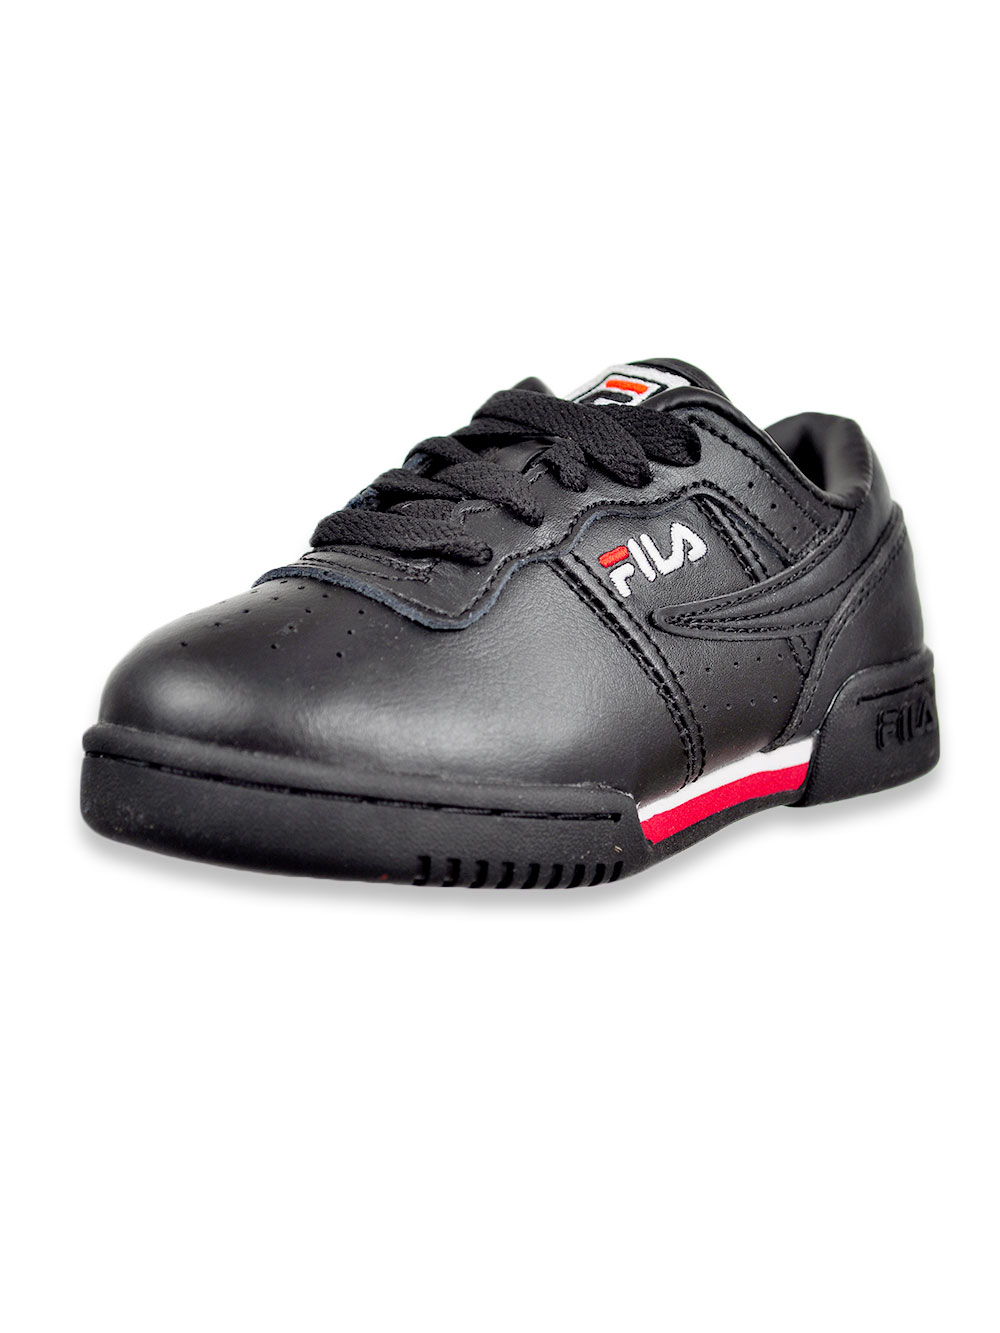 Low-Top Sneakers by Fila in Black multi 